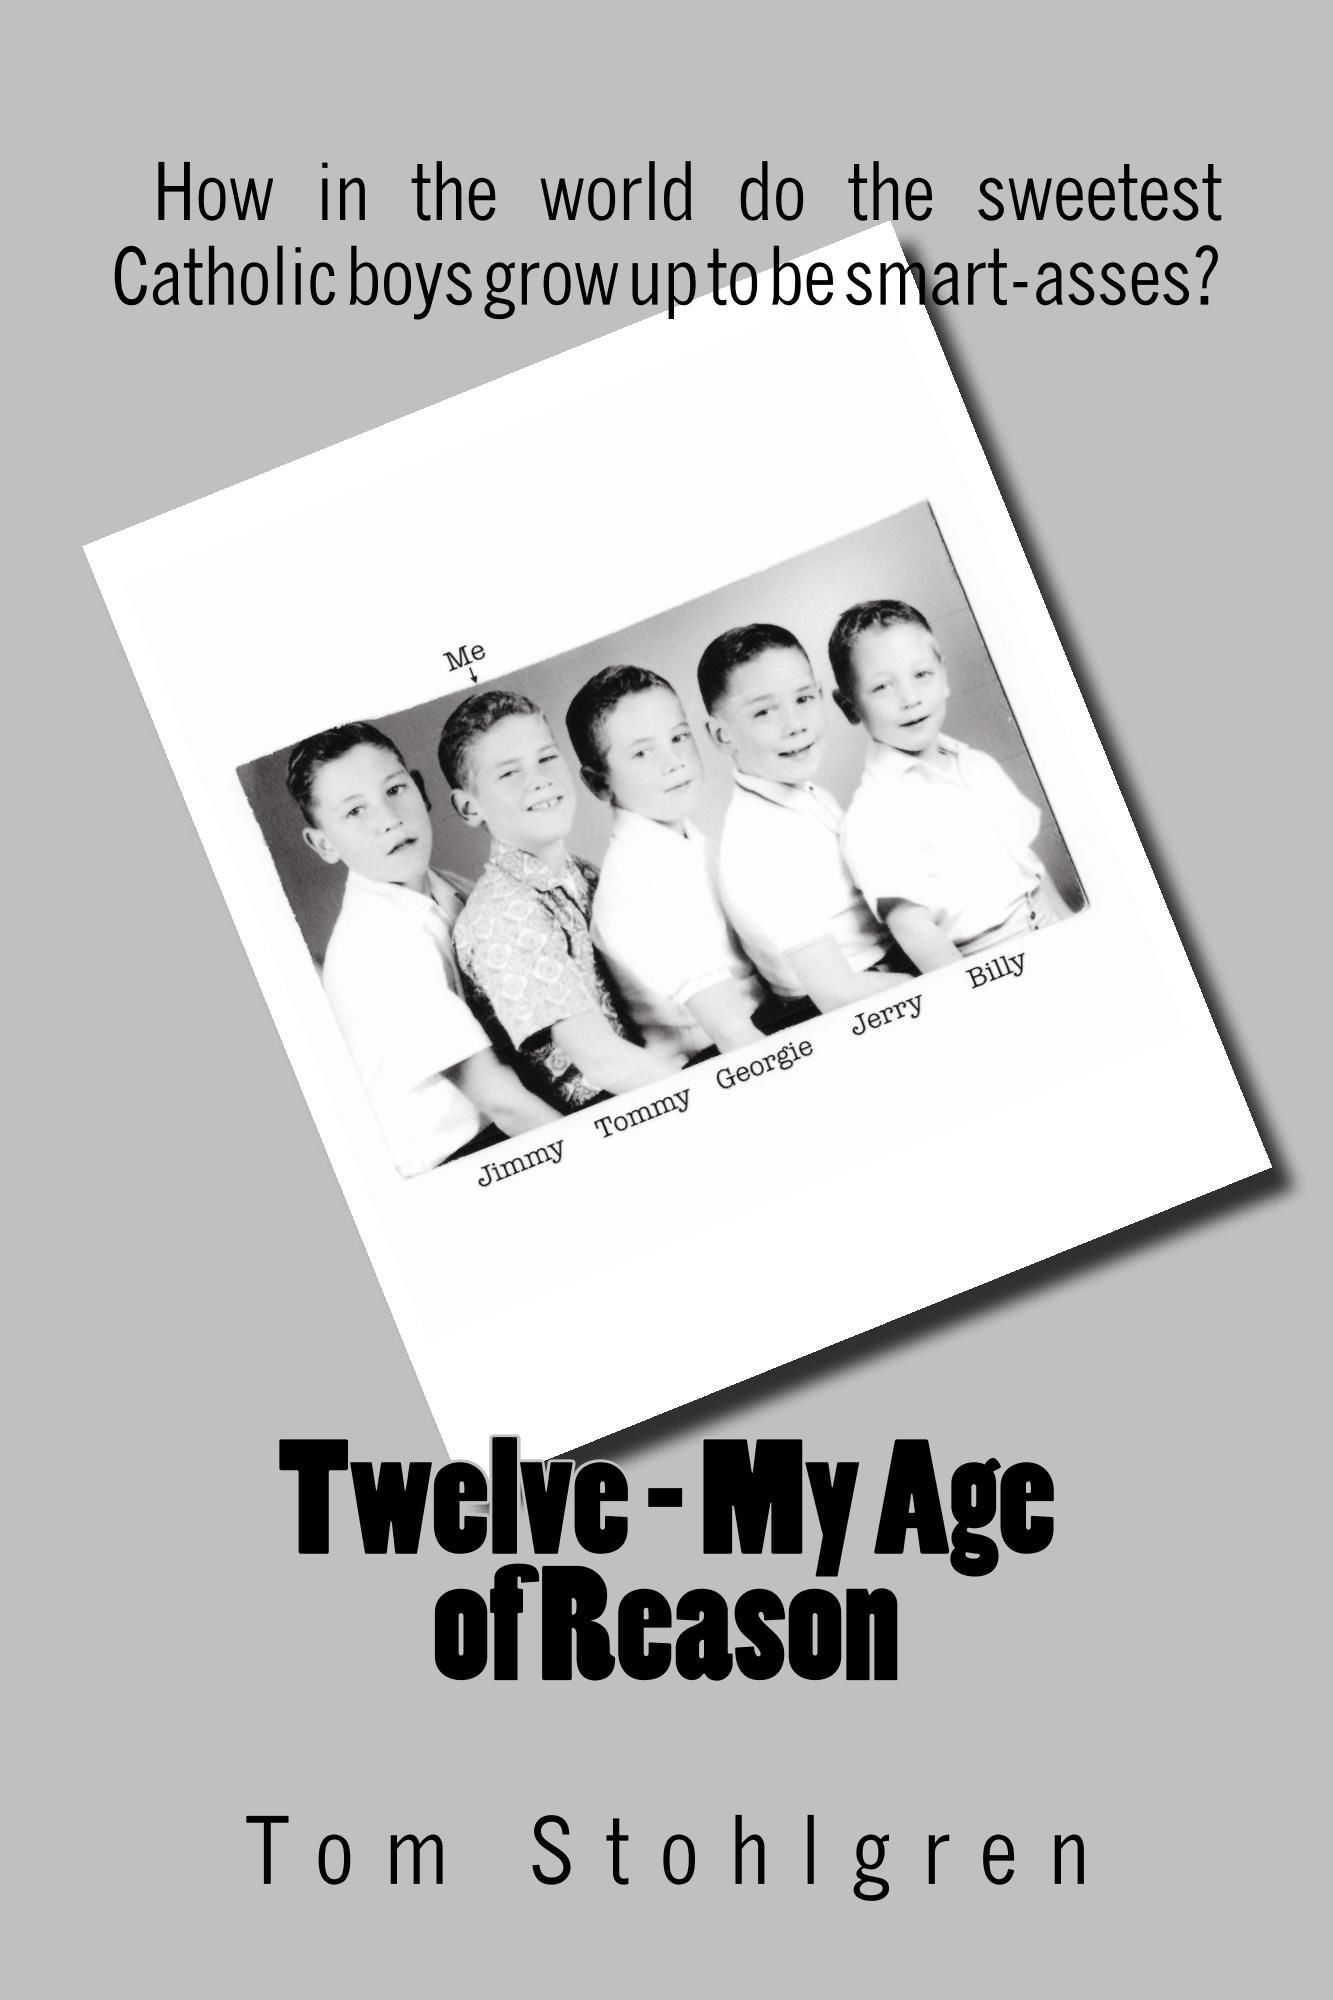  TWELVE - MY AGE OF REASON